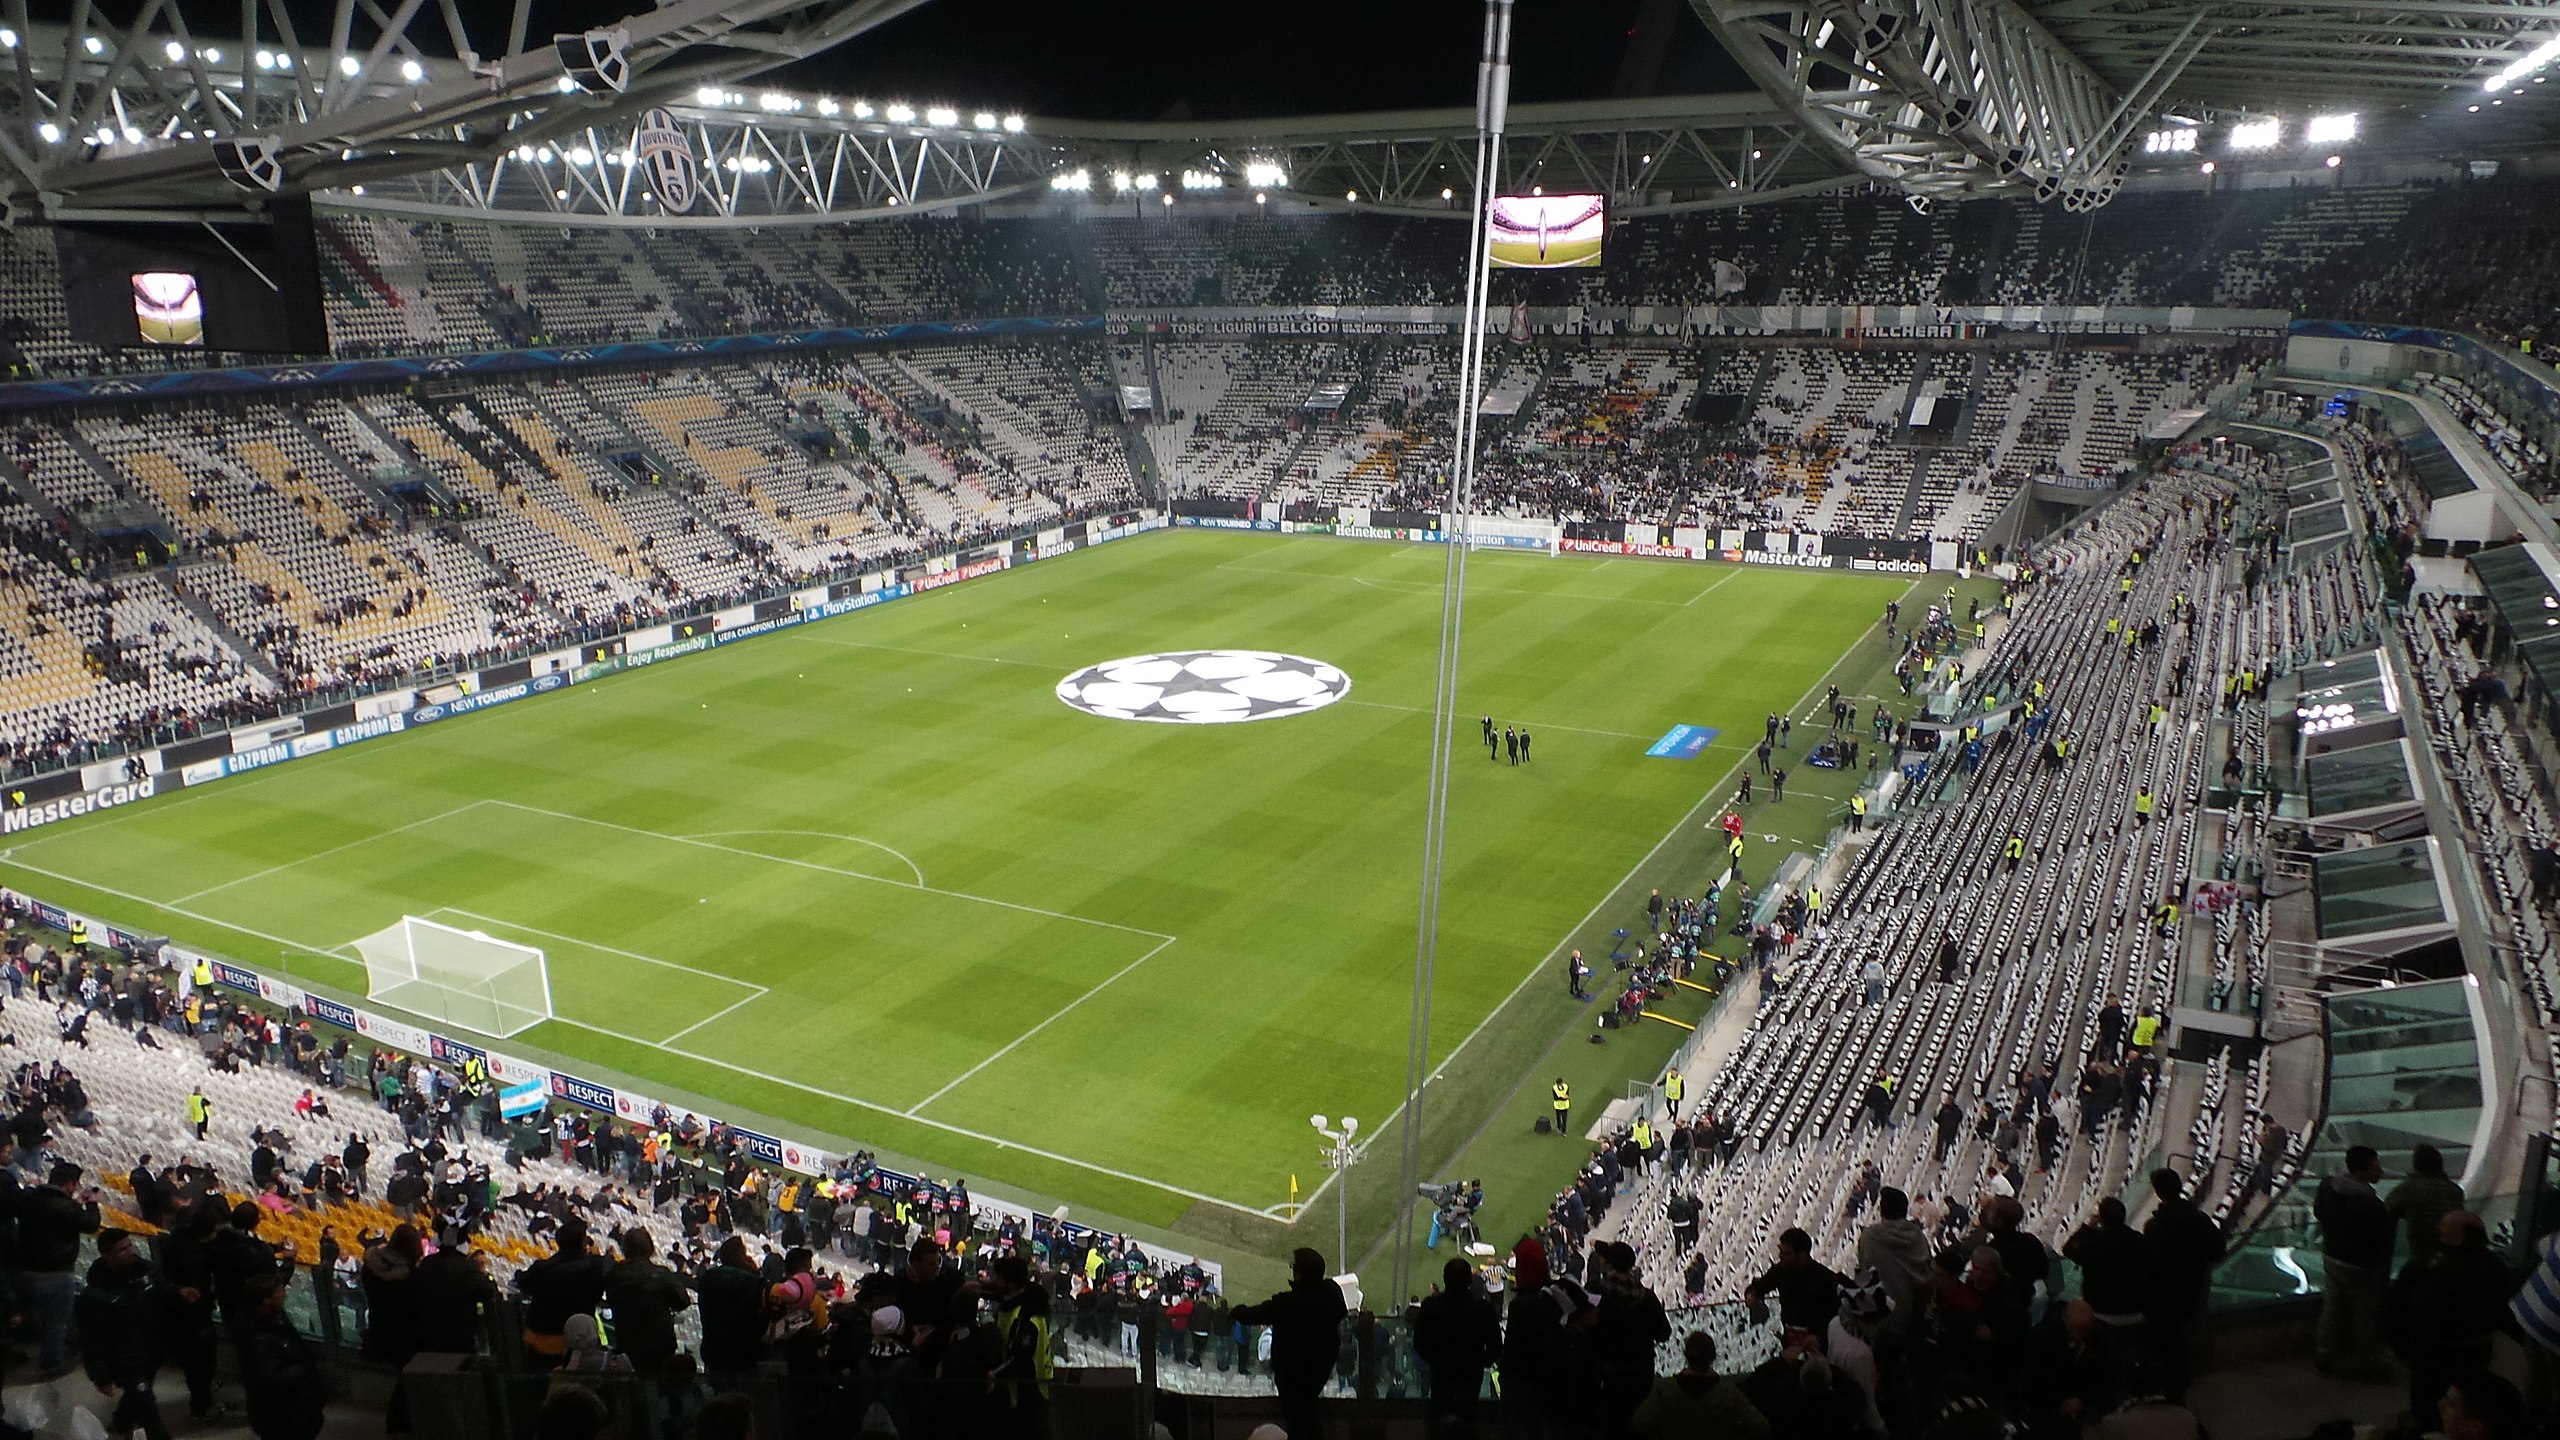 File:Juventus v Real Madrid, Champions League, Stadium, Turin, 2013.jpg - Wikipedia